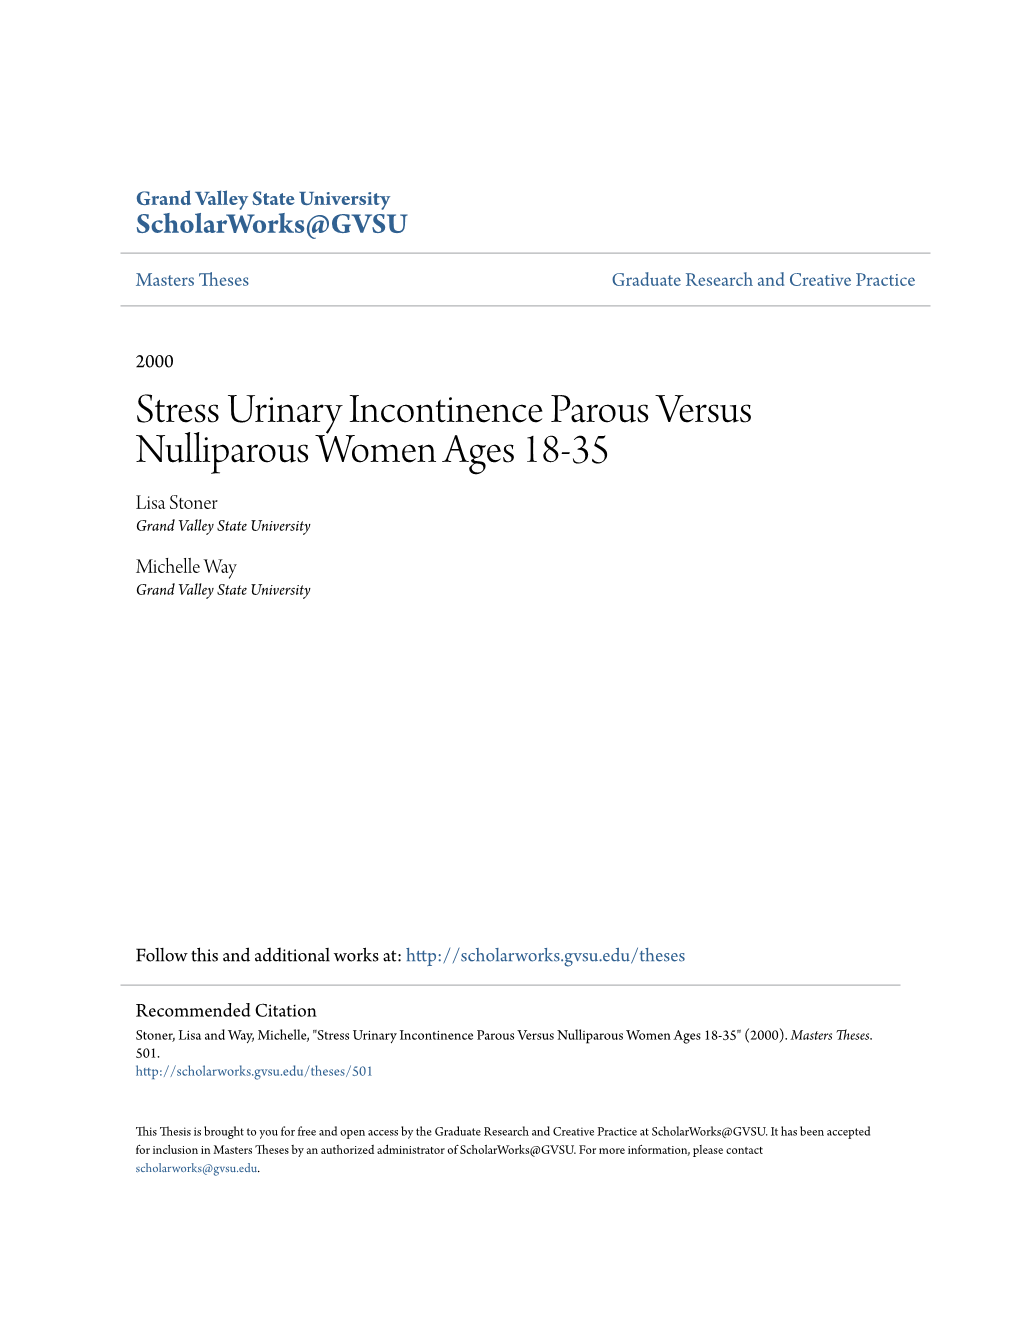 Stress Urinary Incontinence Parous Versus Nulliparous Women Ages 18-35 Lisa Stoner Grand Valley State University